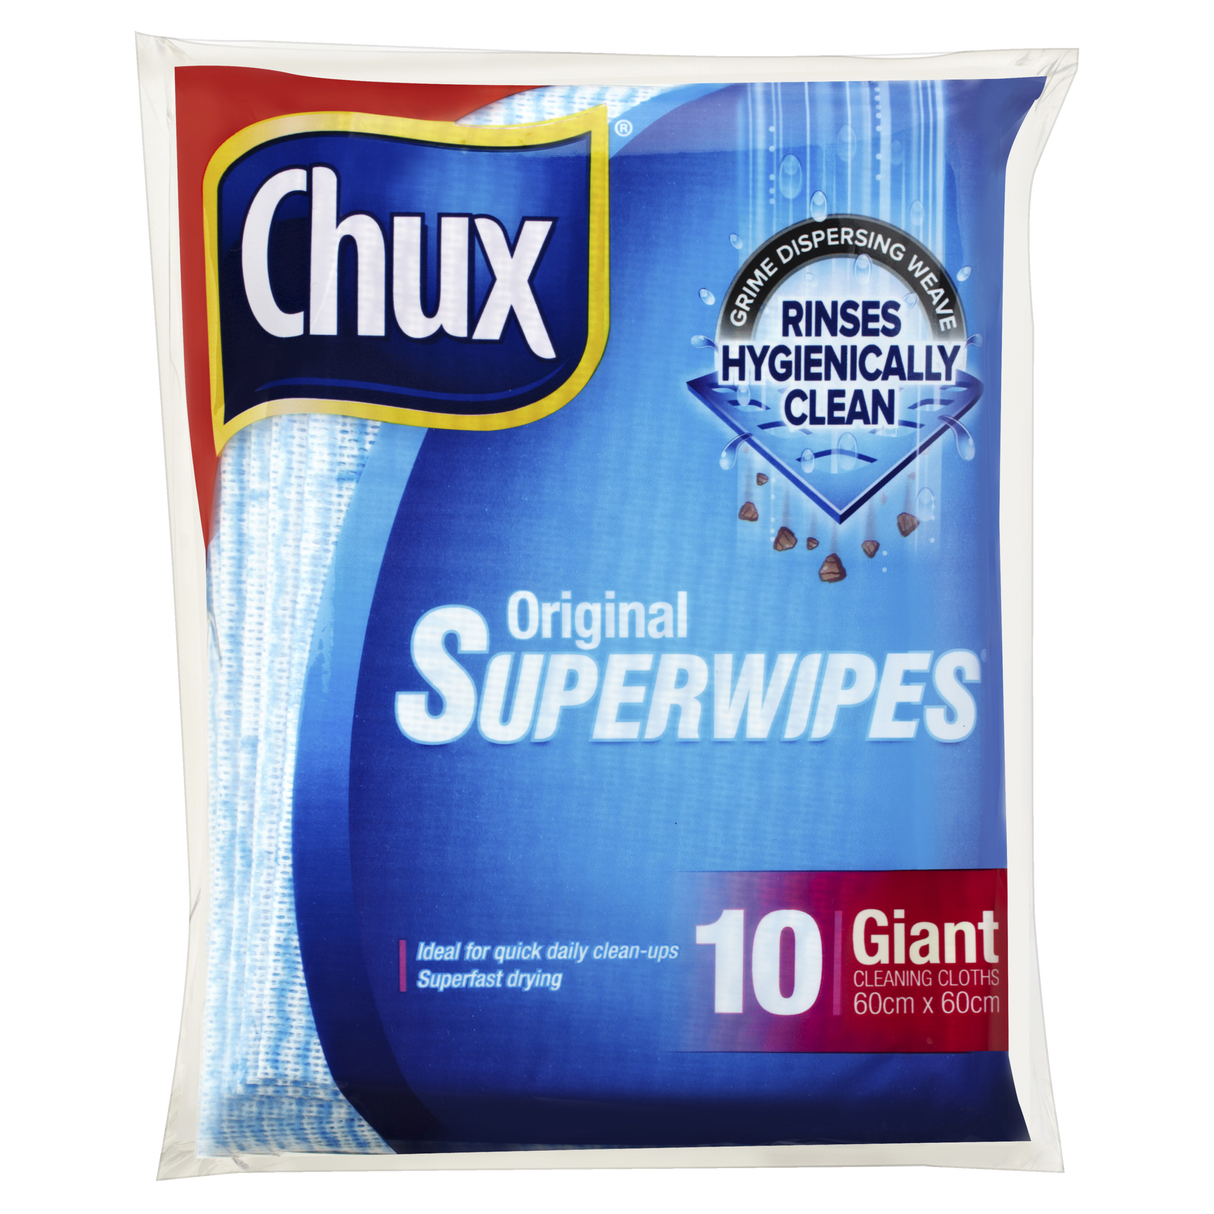 Chux Original Superwipes Giant 10 Pack